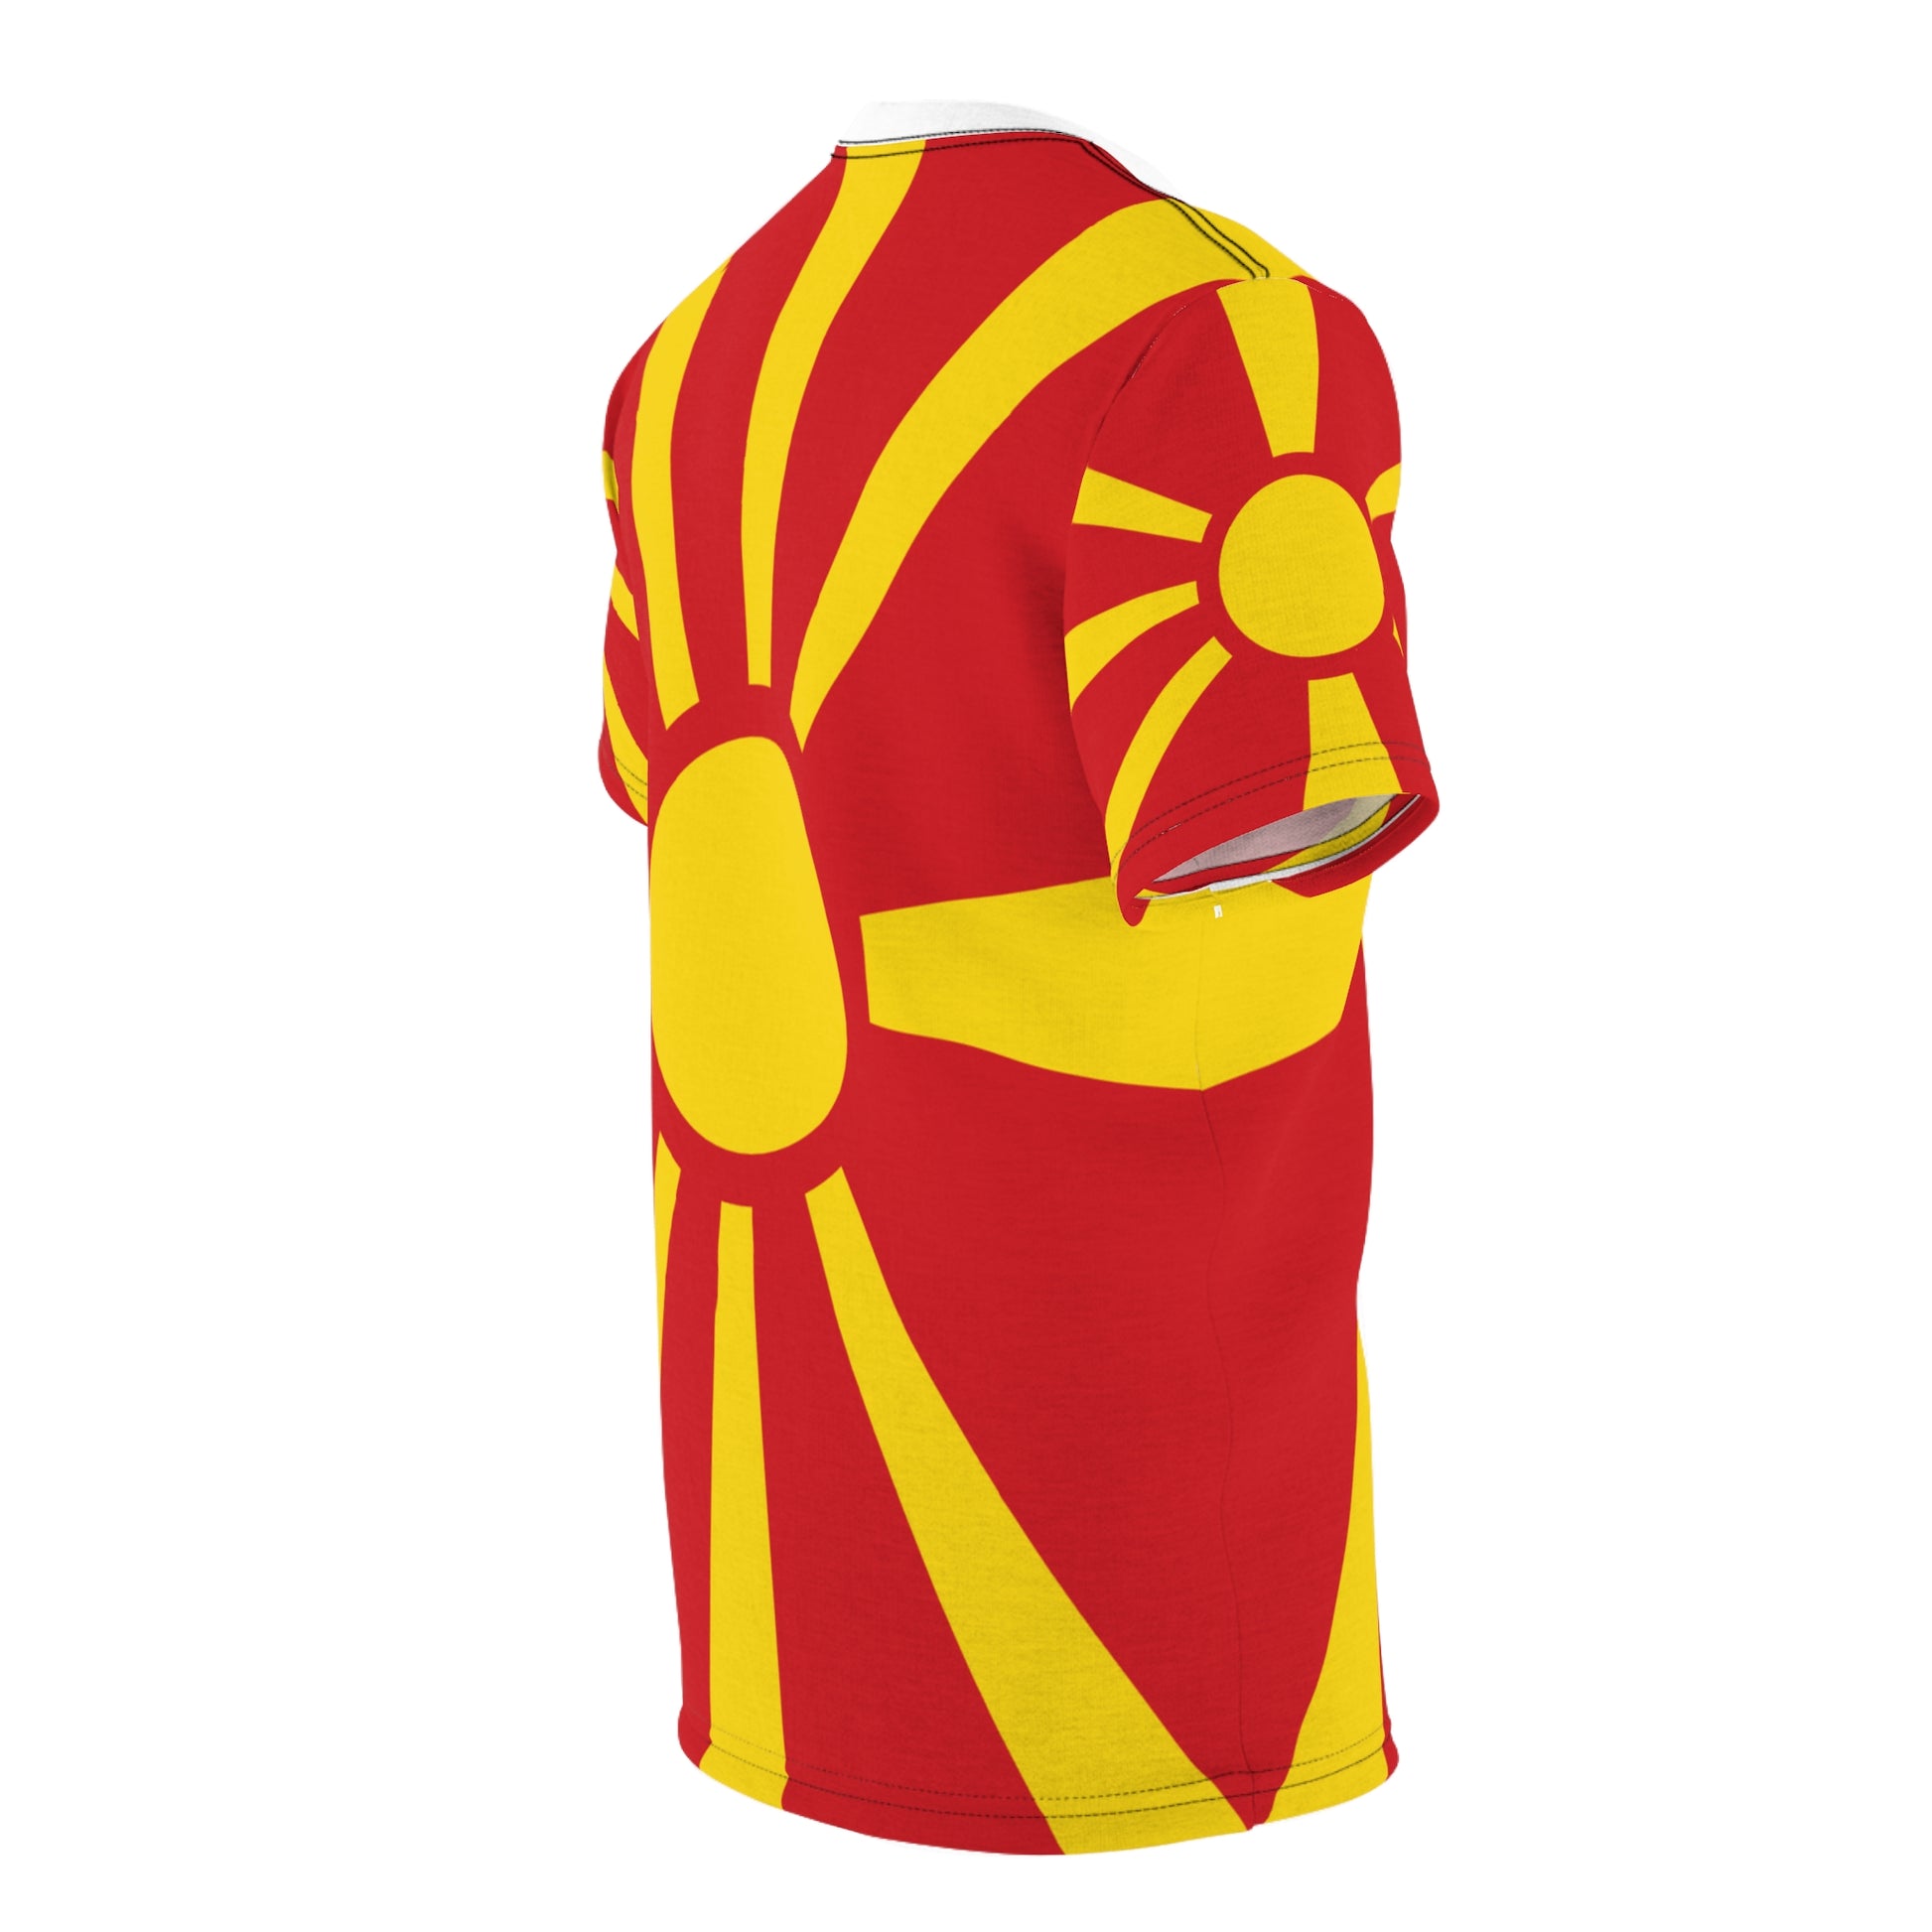 North Macedonia Flag - International Country Flag Unisex Tee